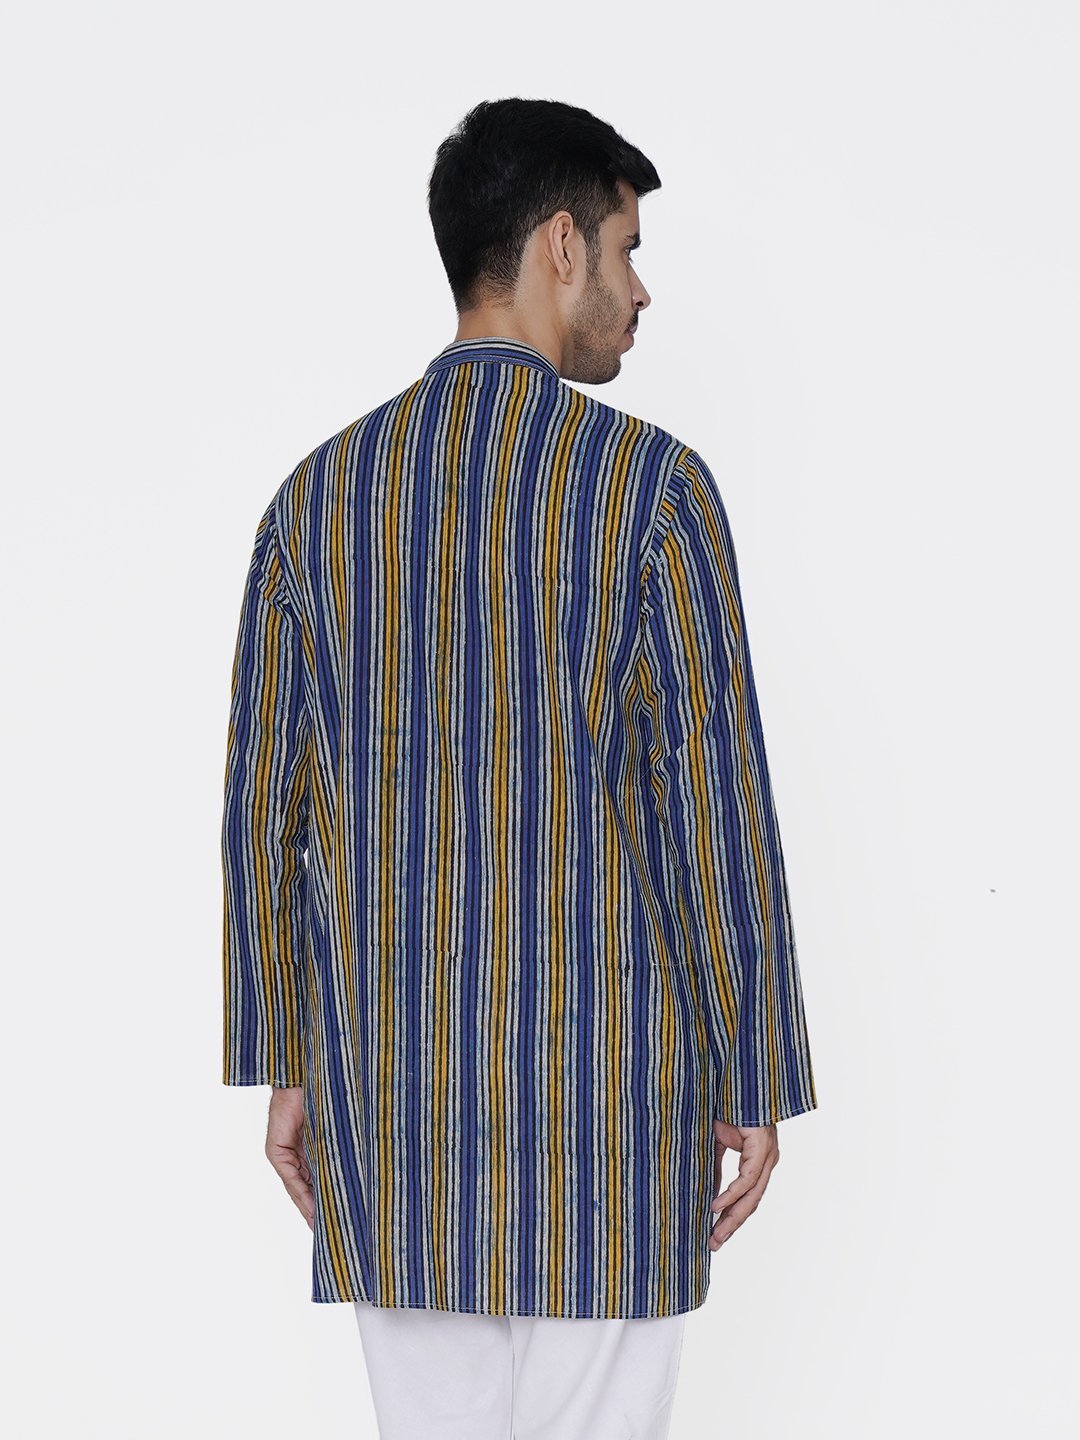 WINTAGE Men's Jaipur Cotton Festive and Casual Long Indian Kurta Sleepset: Multicolor